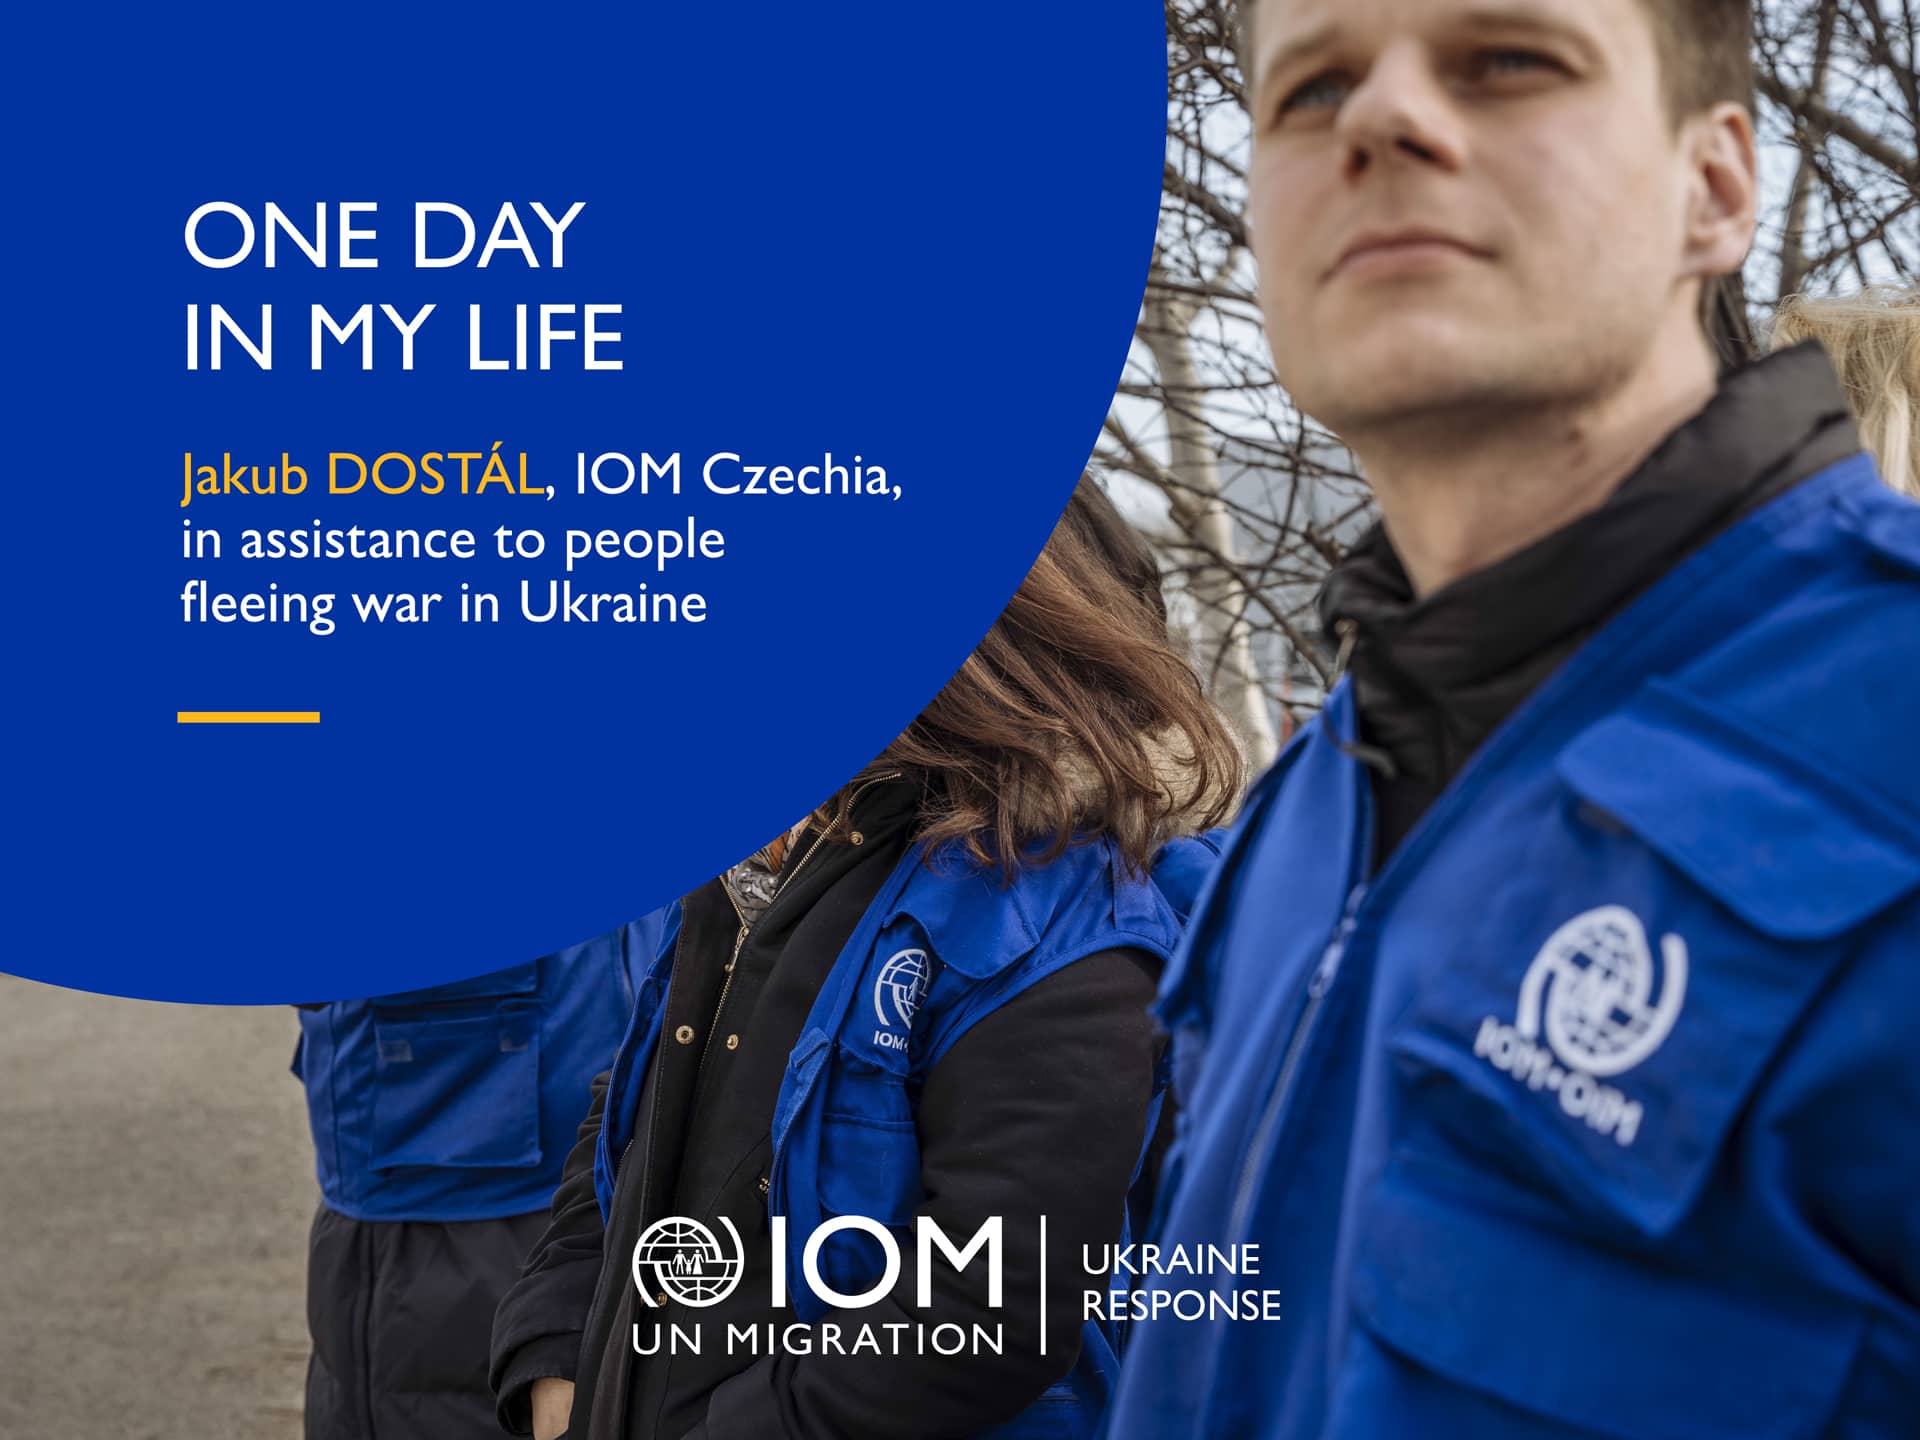 One day in my life in assistance to people fleeing war in Ukraine - Jakub Dostal, IOM Czechia